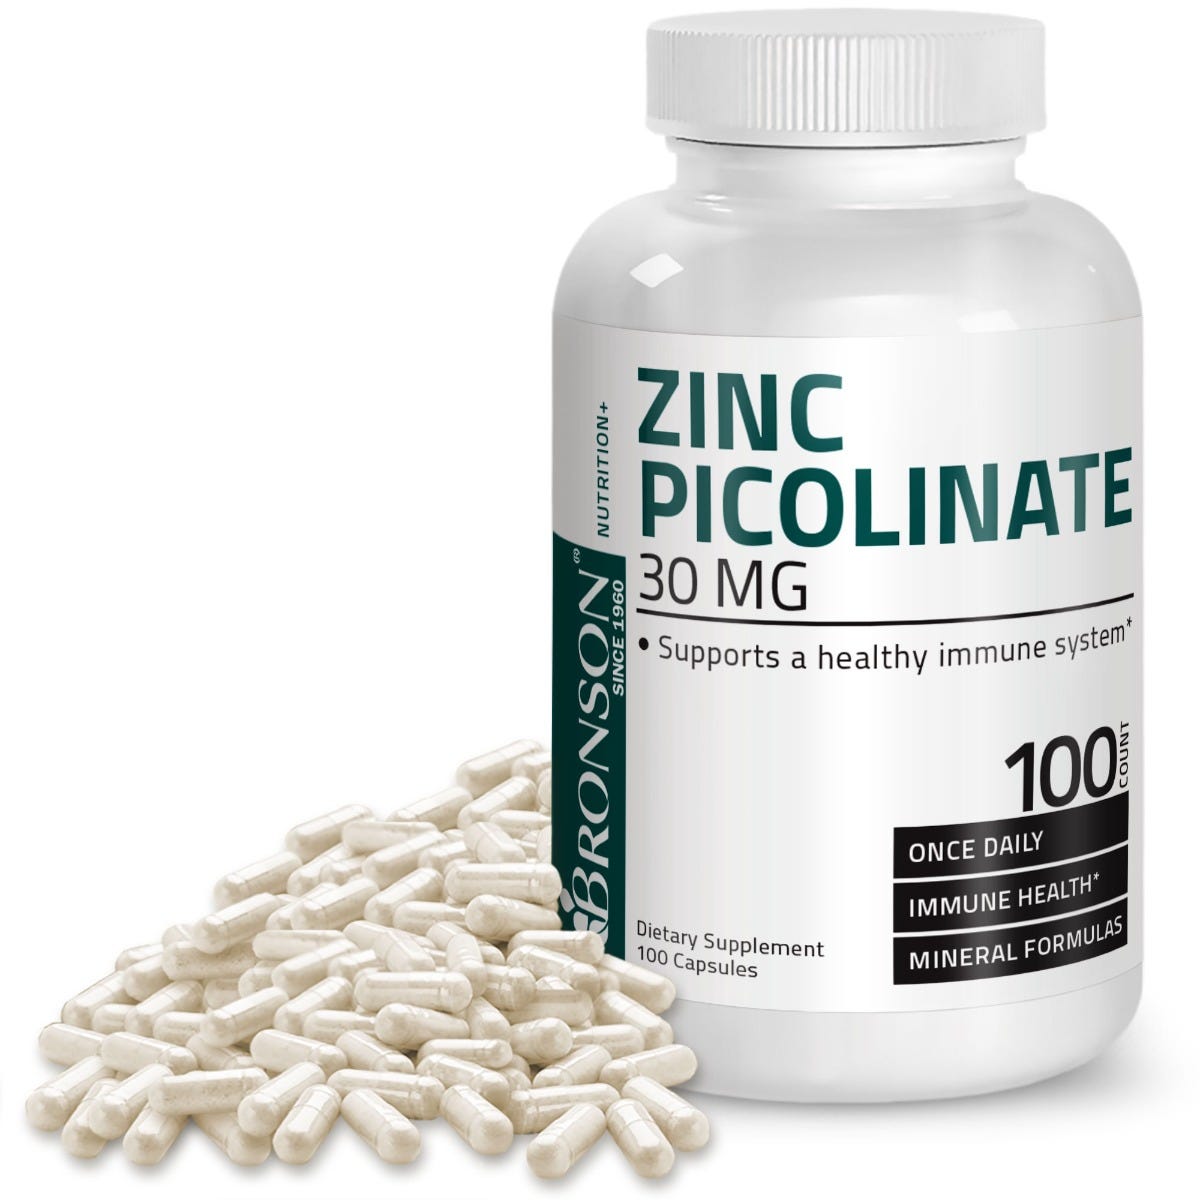 Bronson Vitamins Zinc Picolinate - 30 mg - 100 Capsules, Item #152, Bottle, Front Label with Capsules